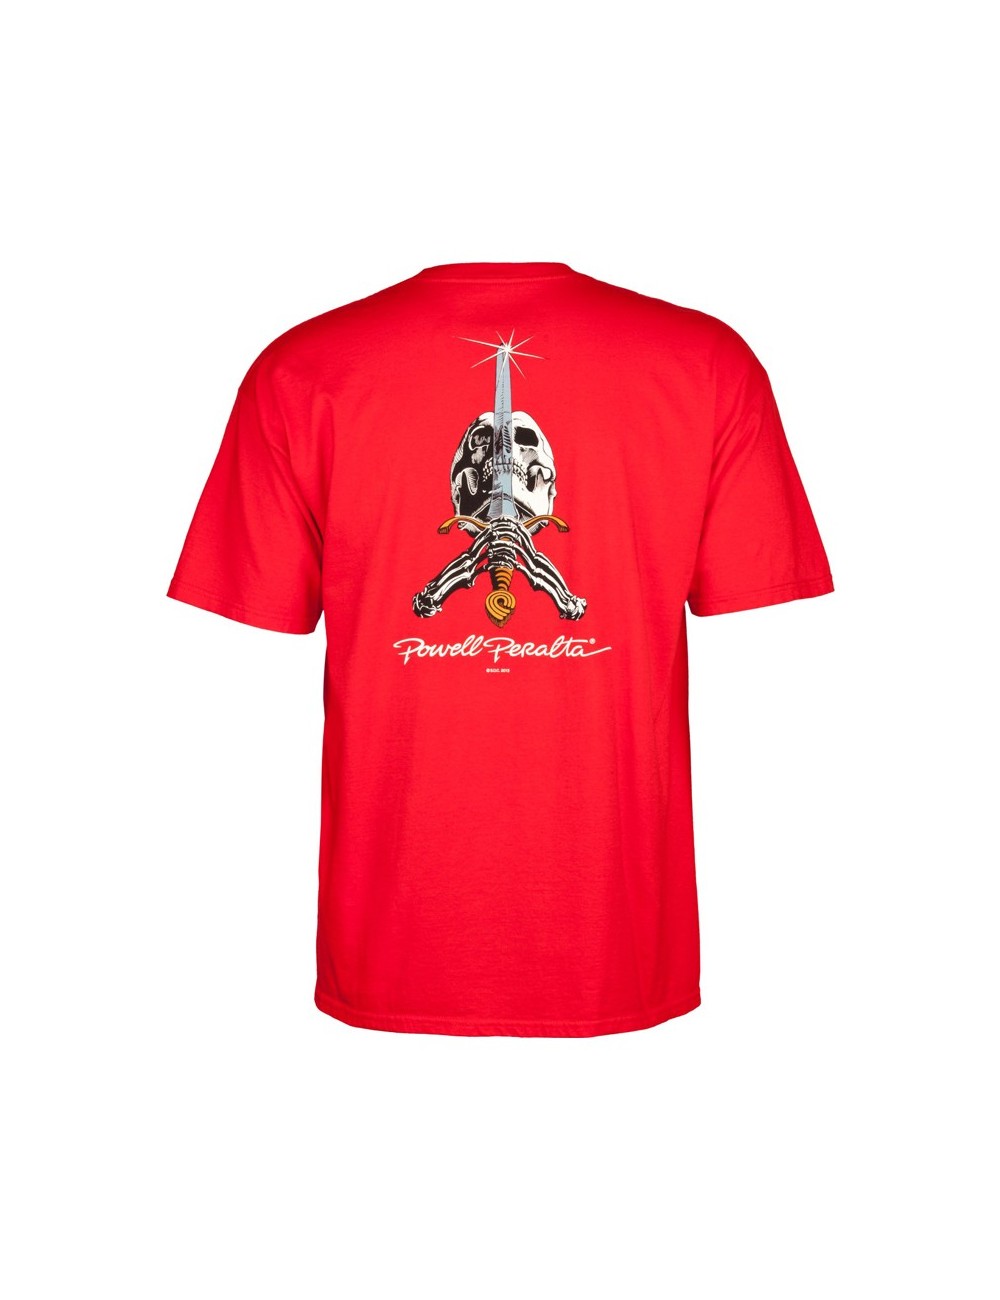 Powell Peralta Skull & Sword Red (Camiseta)